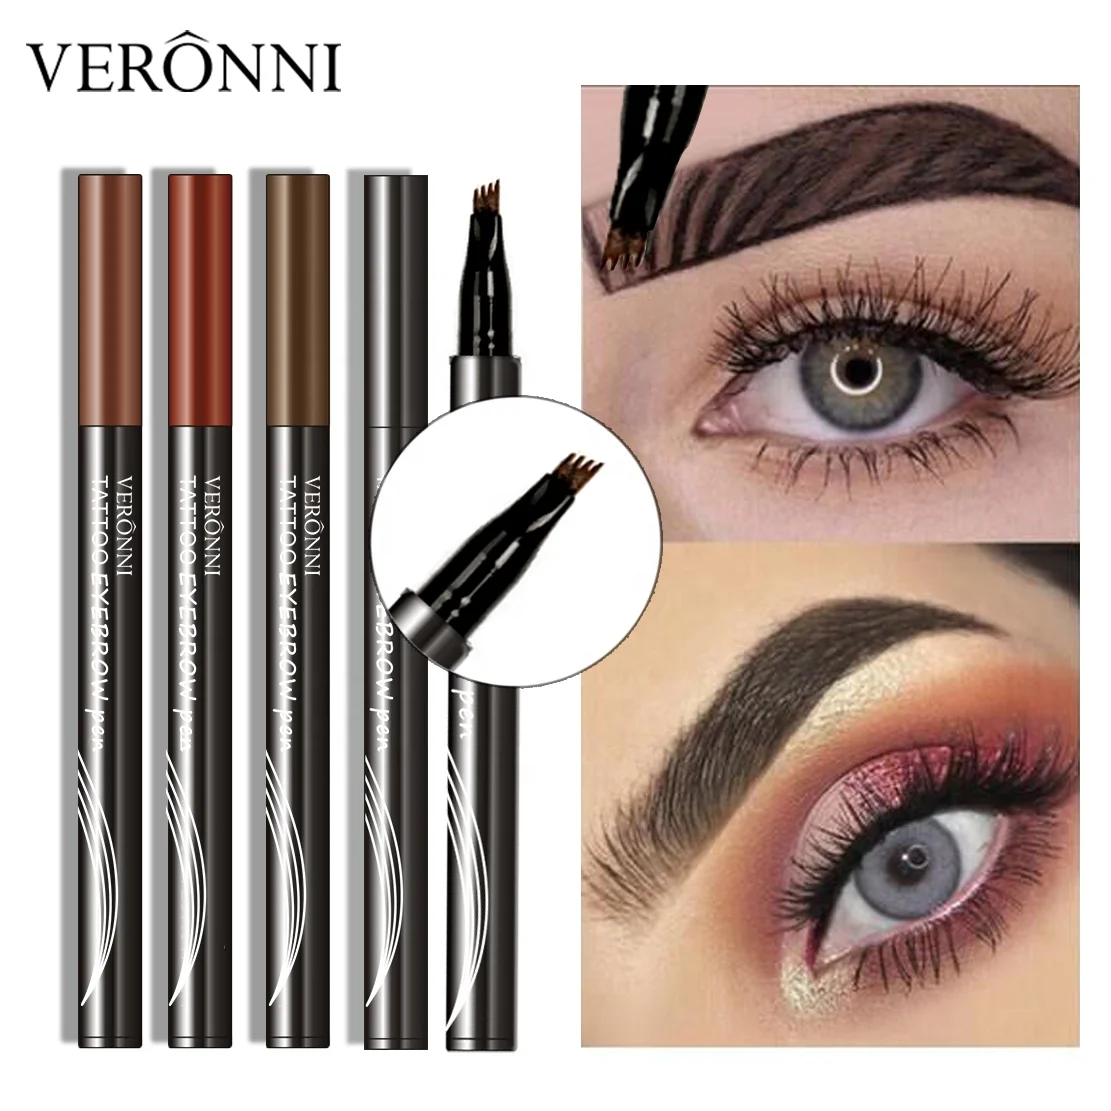 

4 Color Women Makeup Sketch Liquid Eyebrow Pencil Waterproof Brown Eye Brow Tattoo Dye Tint Pen Liner Long Lasting Eyebrow